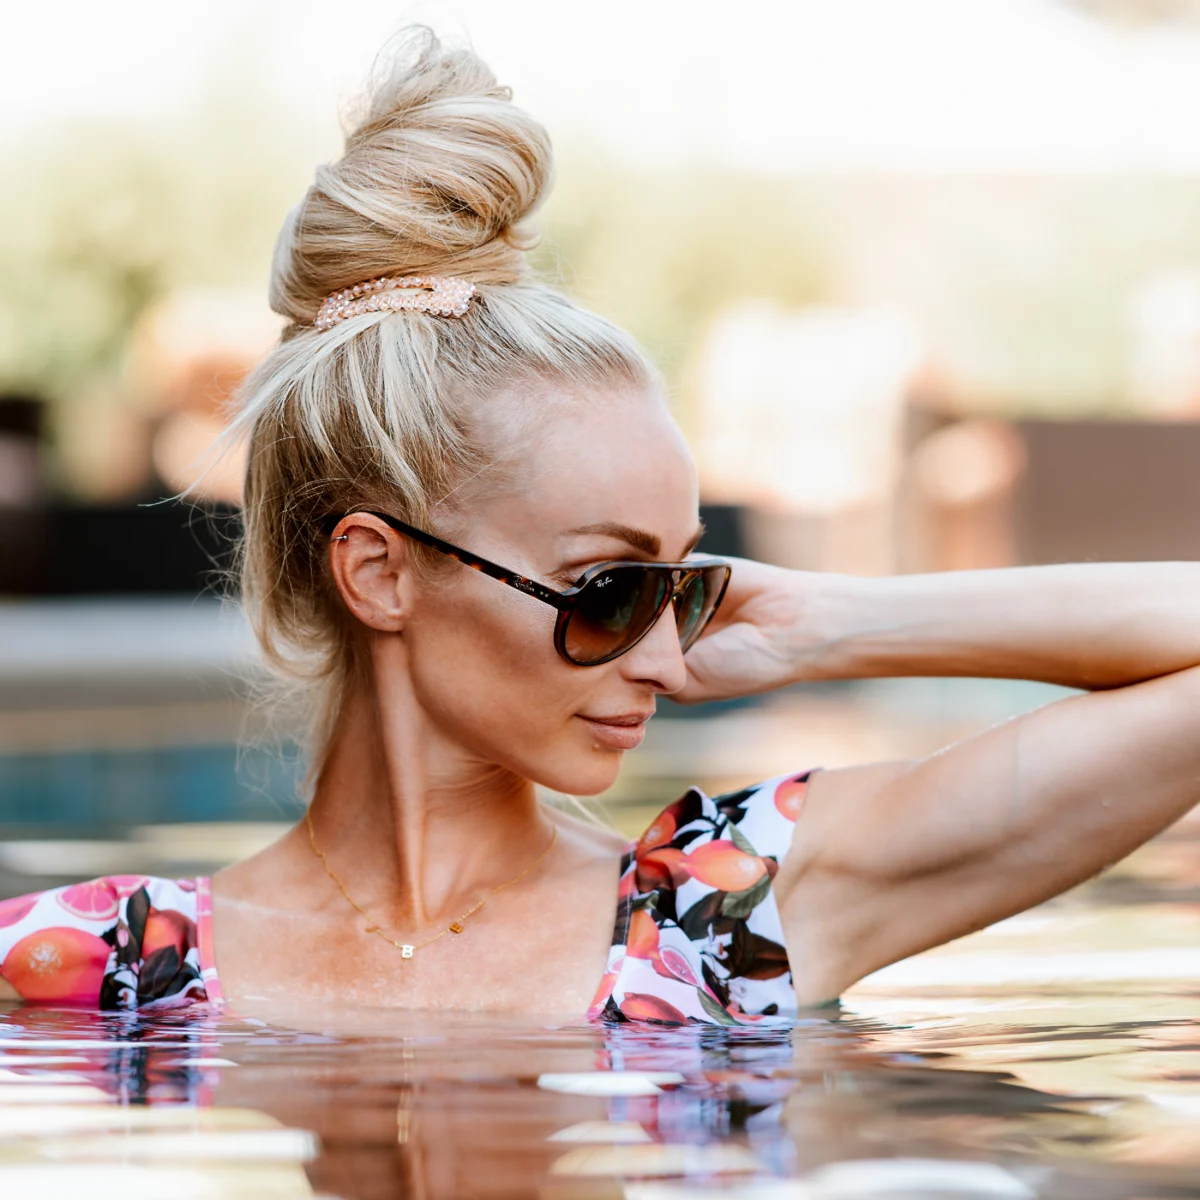 Young blonde woman enjoying the pool